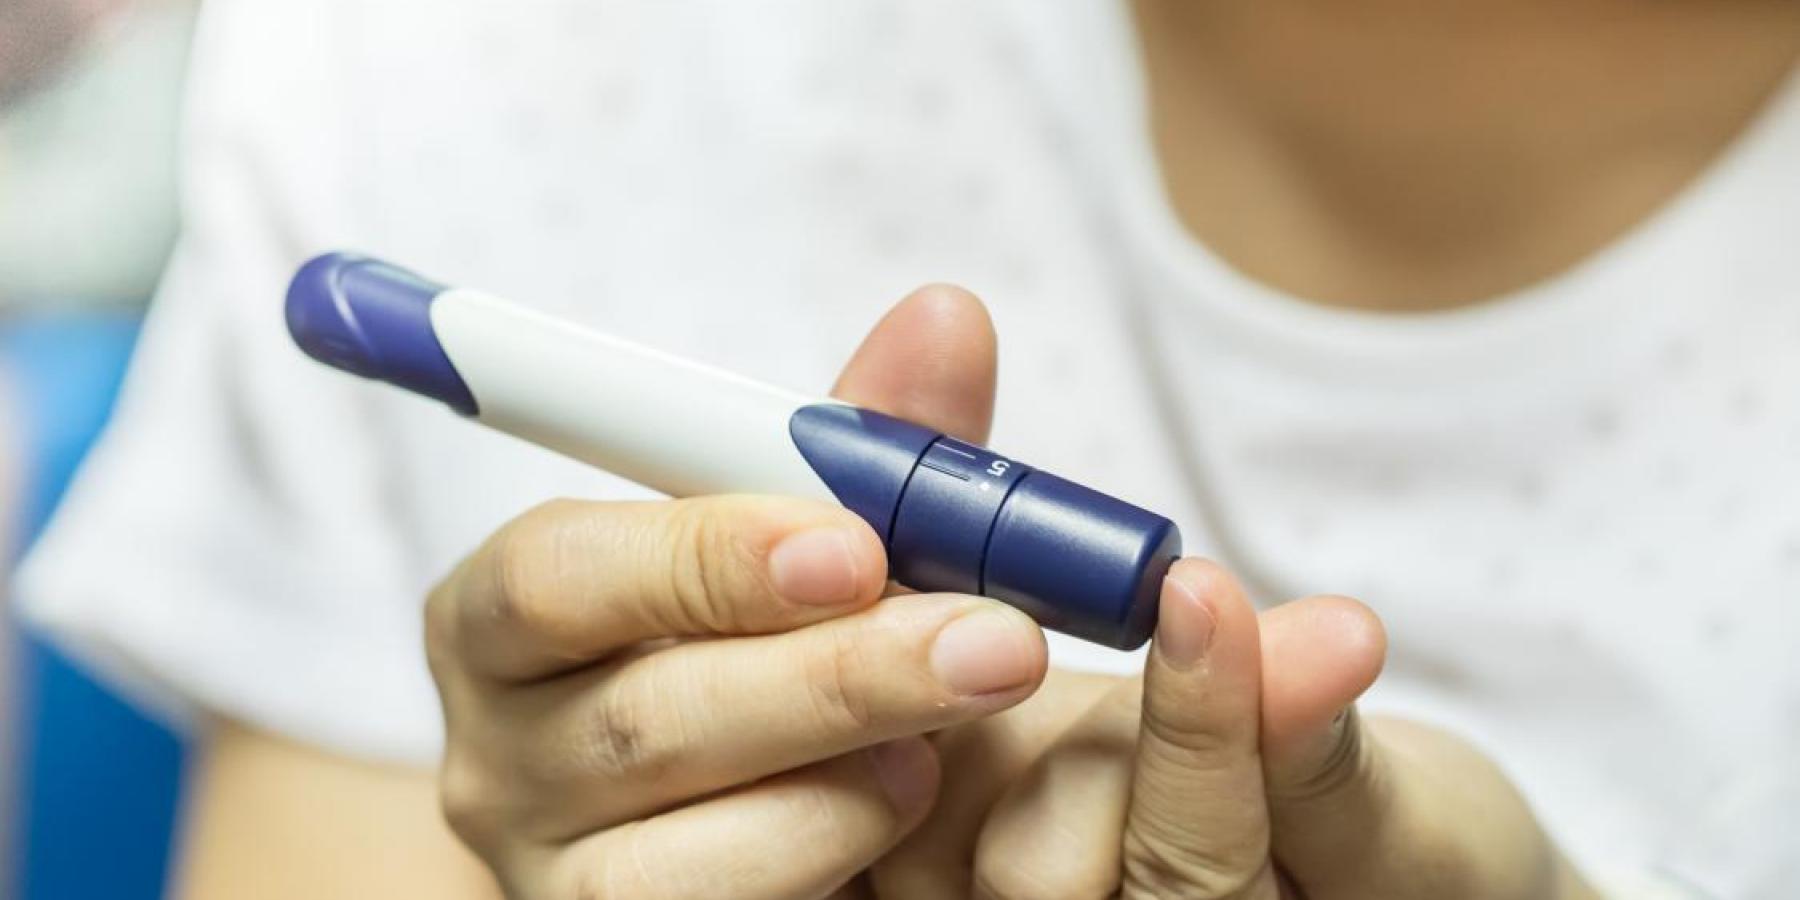 Diabetes. Image by Shutterstock